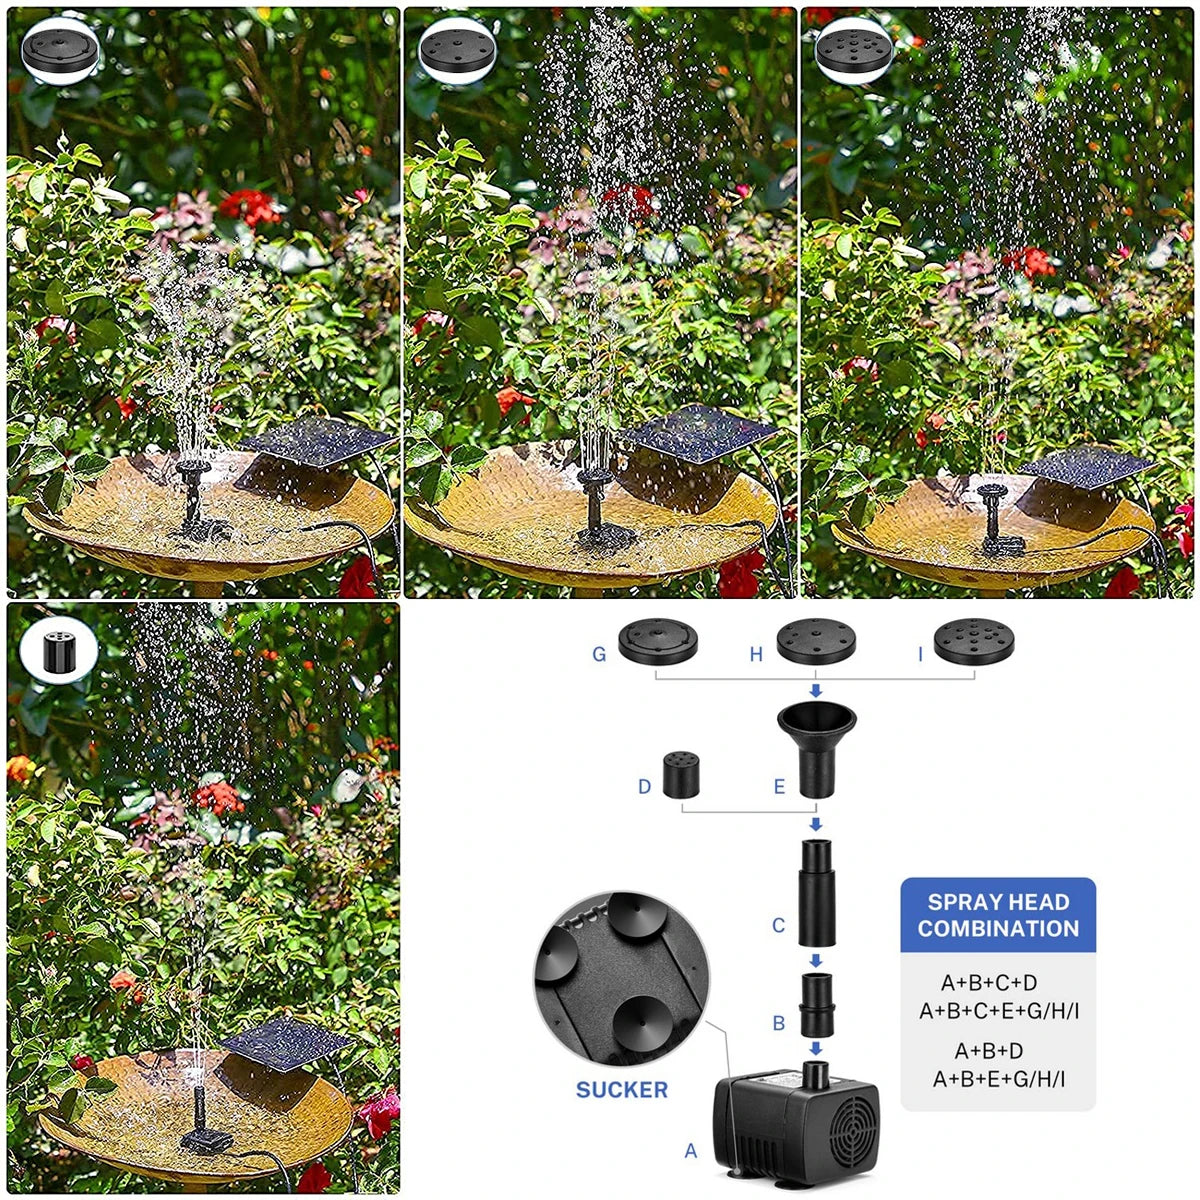 2.5W Solar Fountain, Adjustable nozzles provide various spray patterns for a customizable bird bath experience.